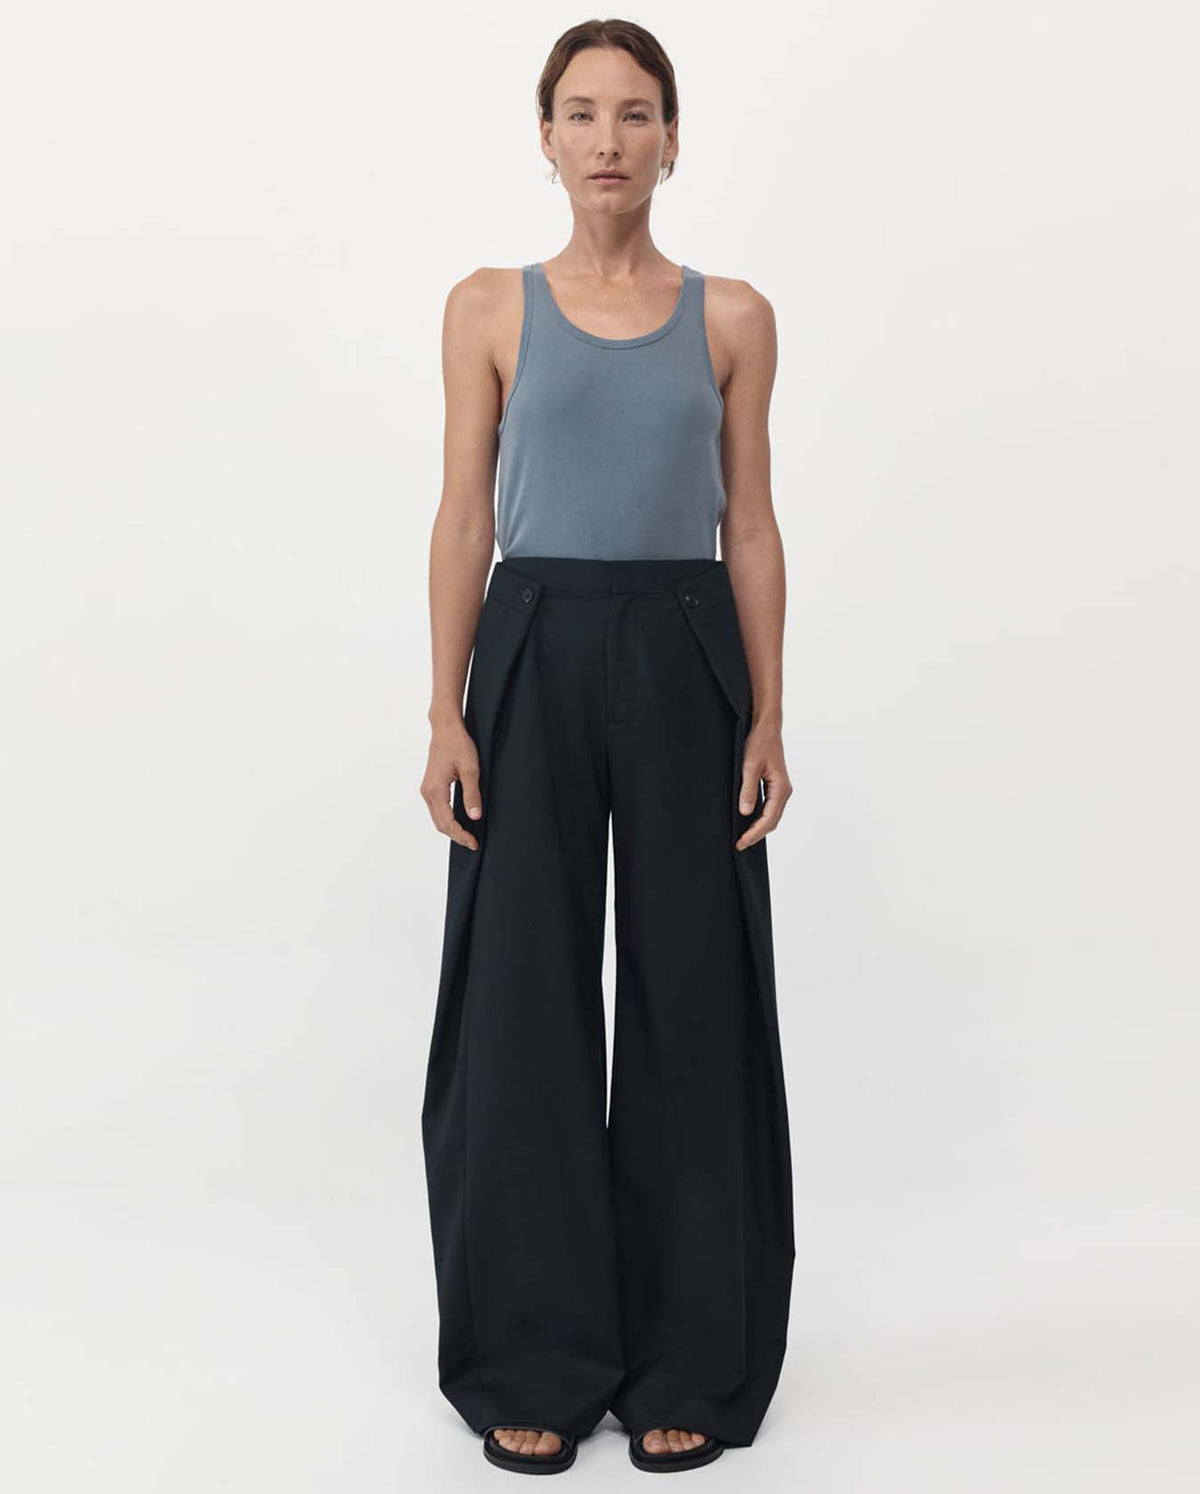 Fold Detail Trousers - Black